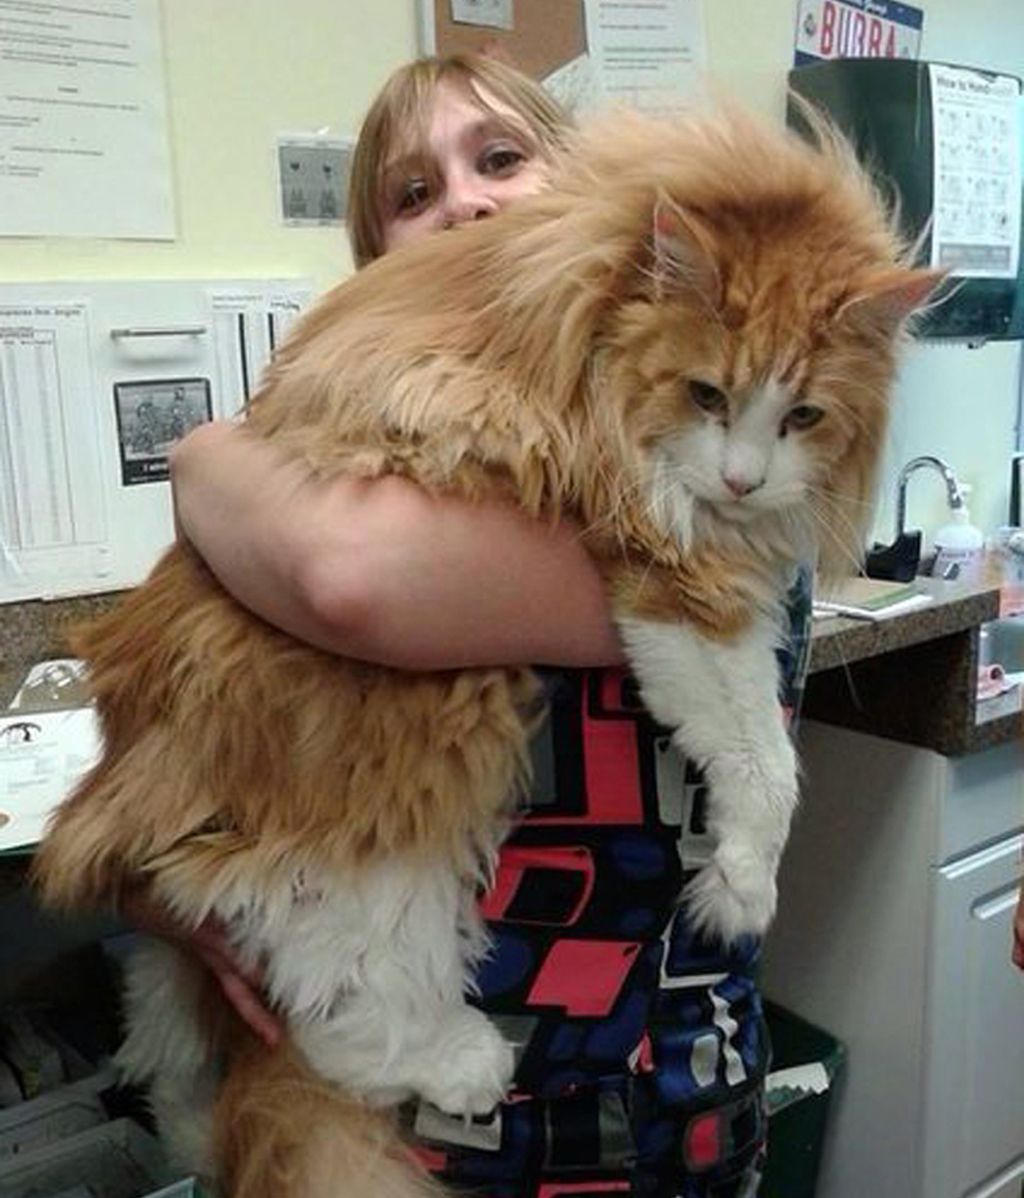 Gatos gigantes no aptos para todos los hogares